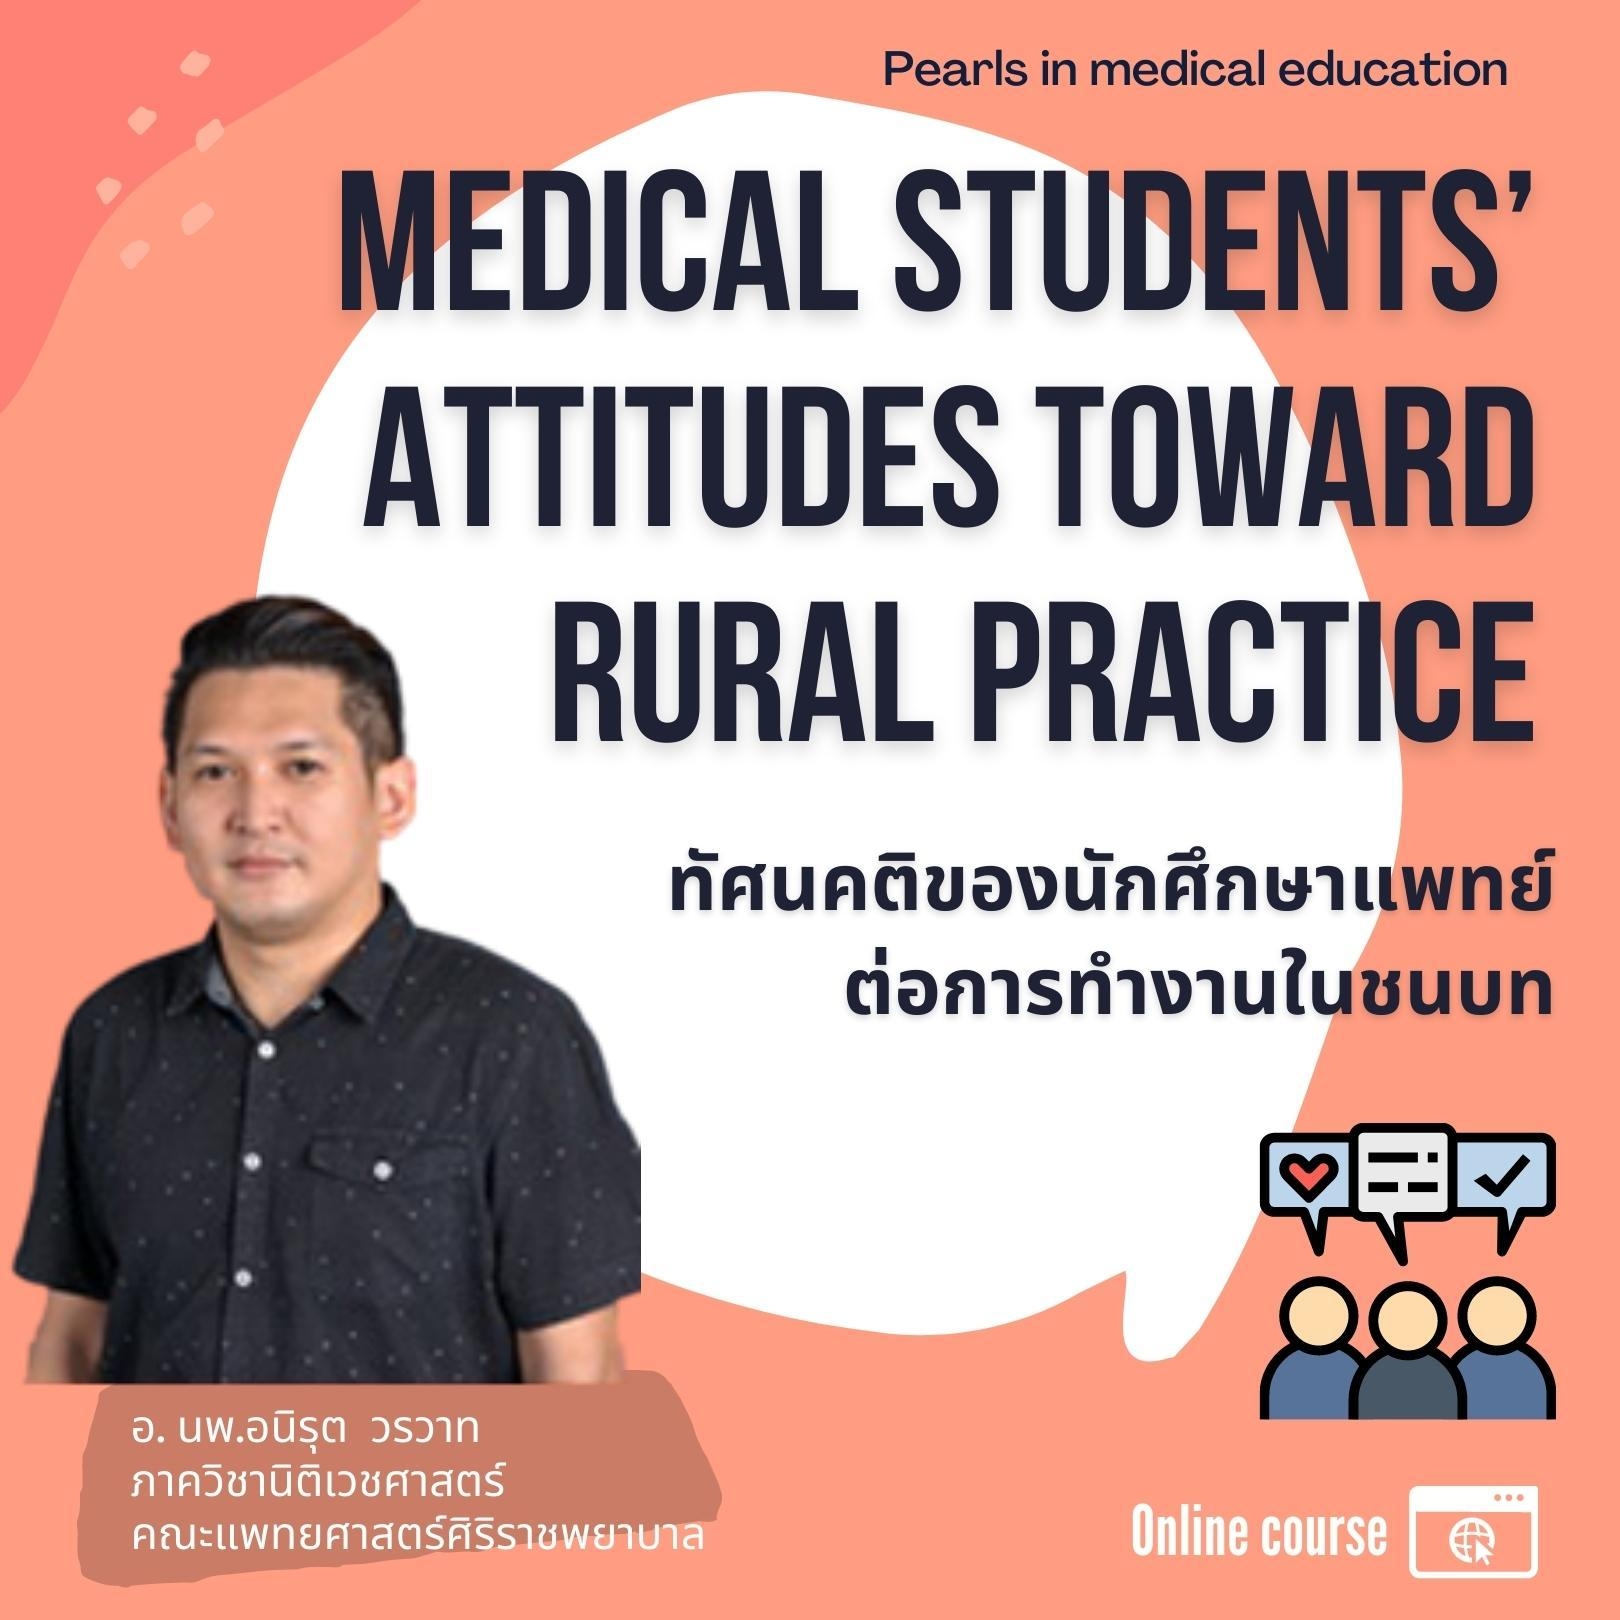 Medical students’ attitudes toward rural practice  ทัศนคติของนักศึกษาแพทย์ต่อการทำงานในชนบท